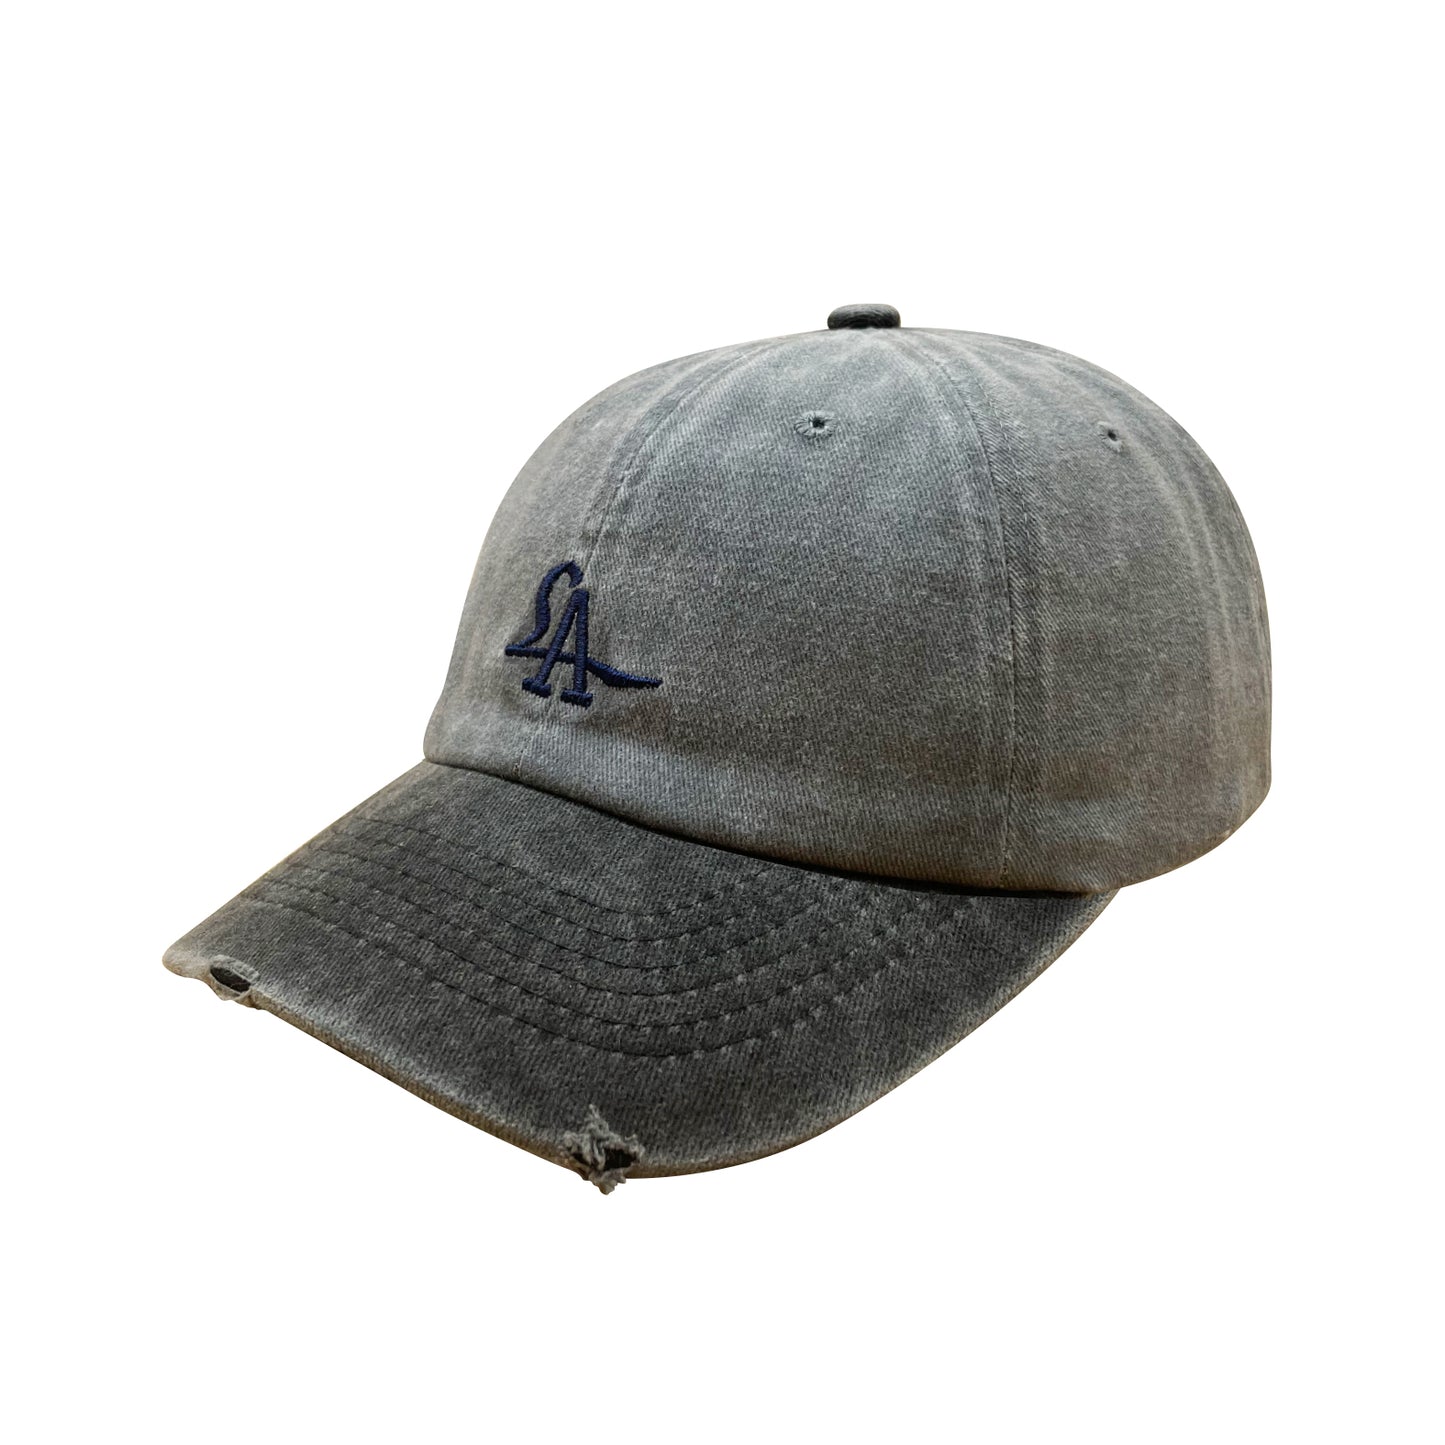 Lust Angeles distressed cap in